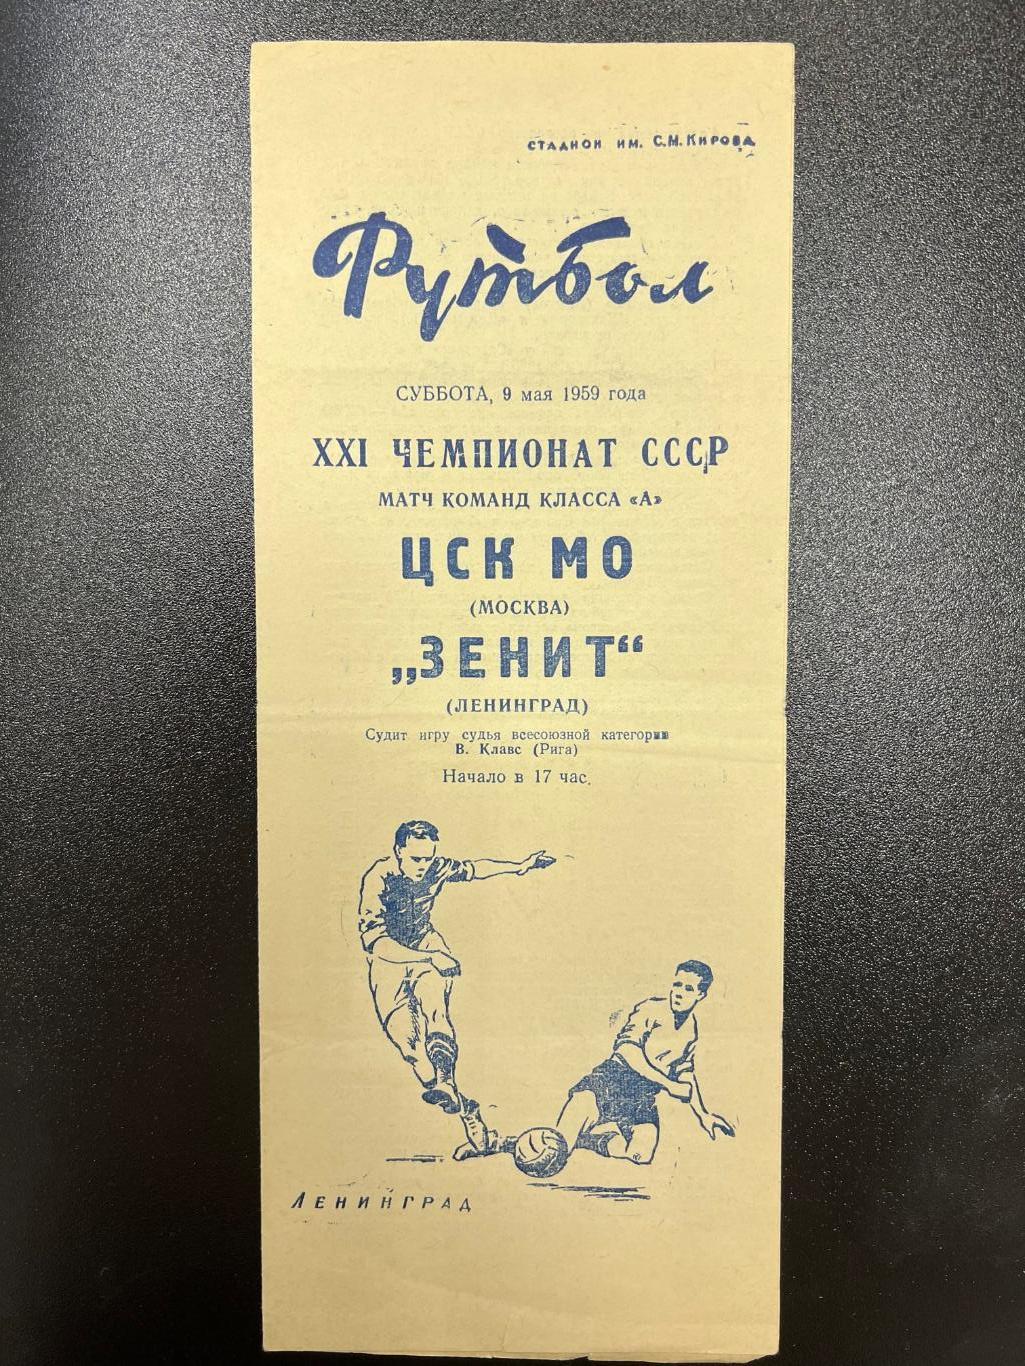 Зенит (Ленинград) Санкт-Петербург - ЦСК МО ЦДКА ЦСКА (Москва) - 1959